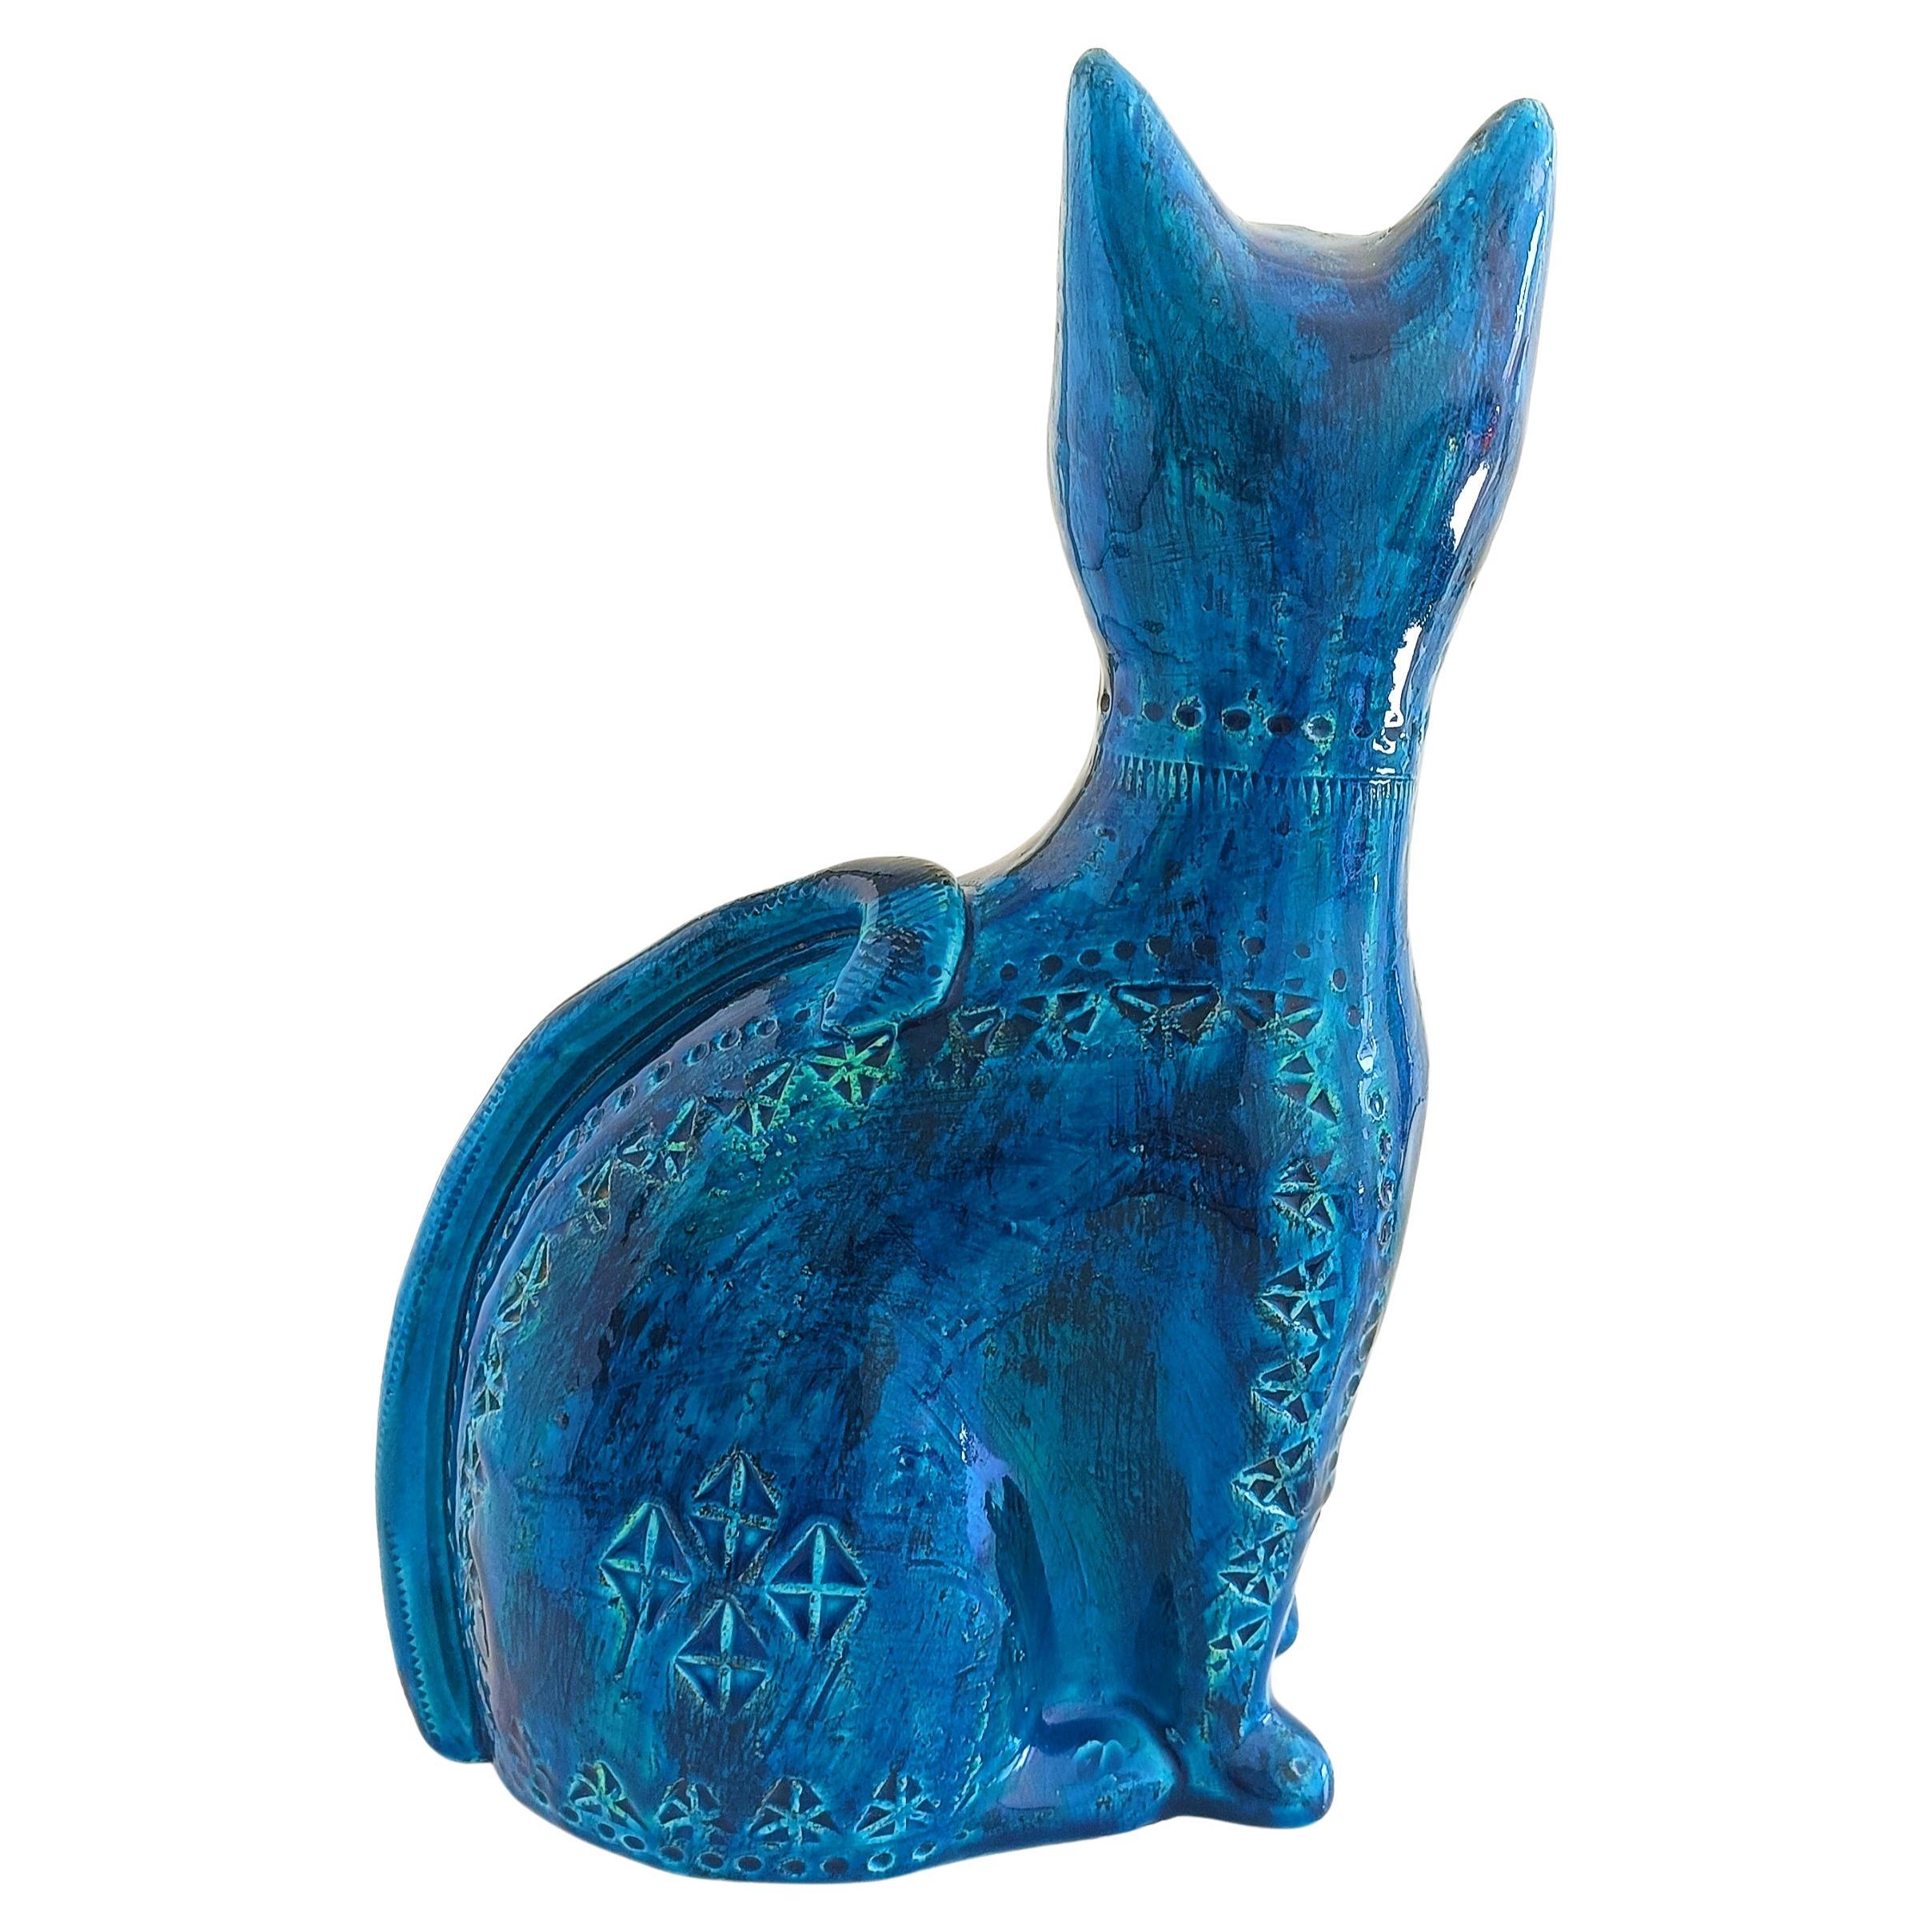 Glazed Bitossi Aldo Londi Rimini Blu Mid Century Large Ceramic Cat Sculpture 1960s For Sale